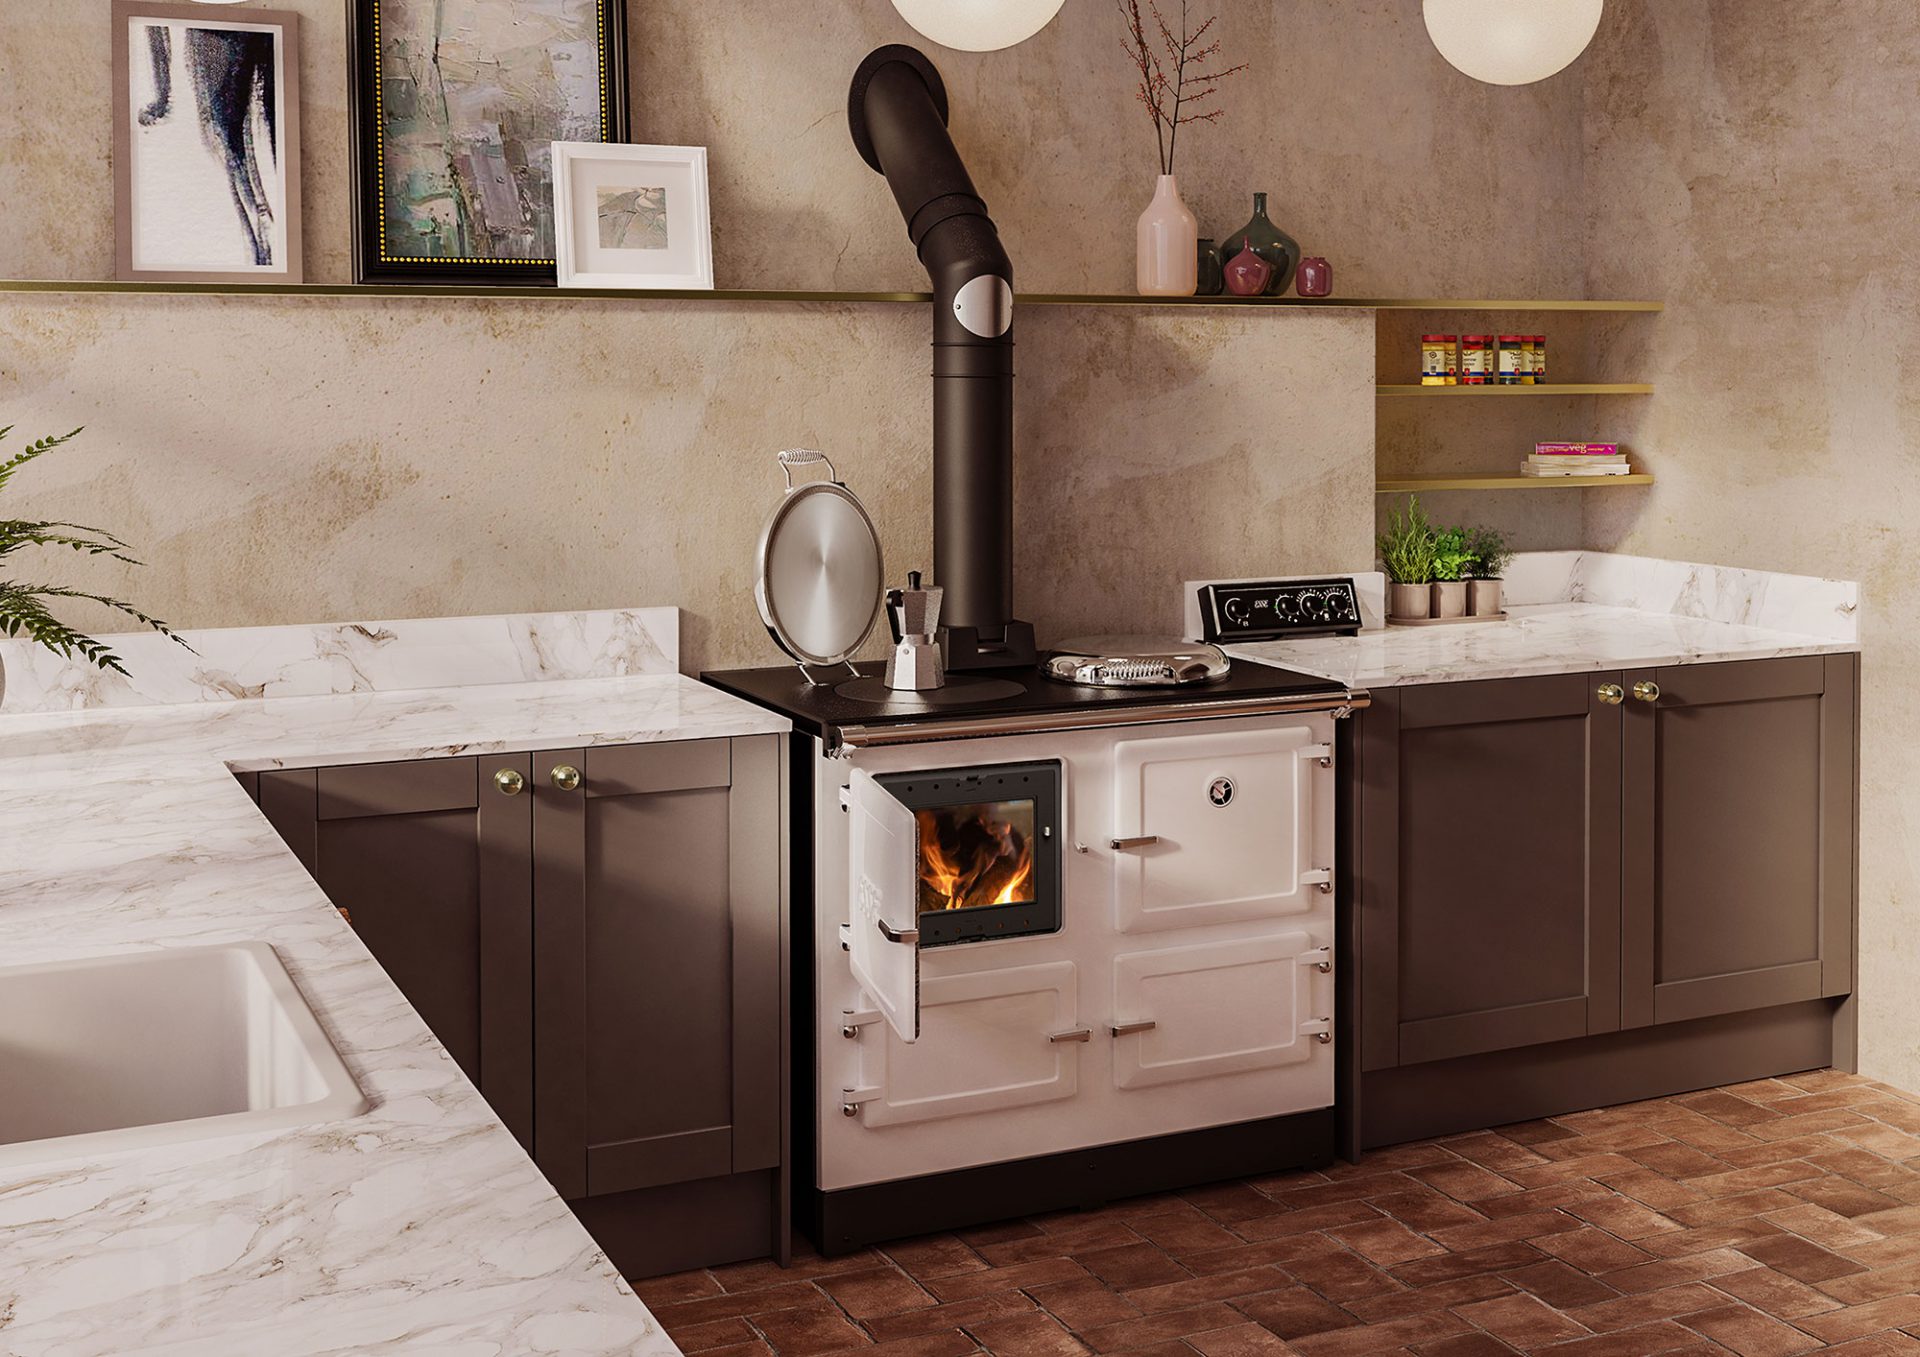 Modern Kitchen Stove Kitchen Accessories Design Your Kitchen From The